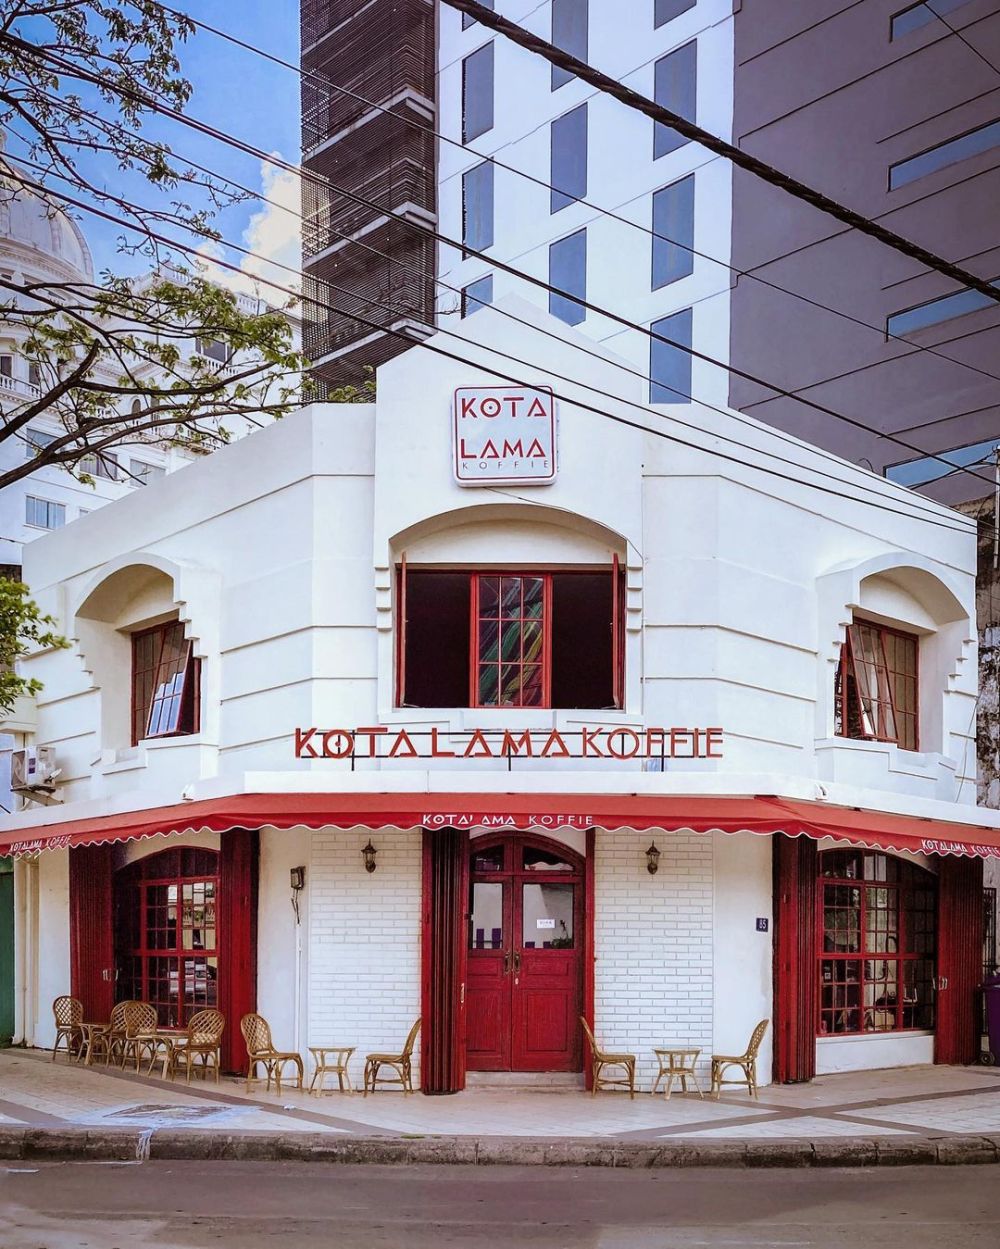 10 Kafe Unik di Surabaya dengan Konsep Vintage hingga Indoor Garden